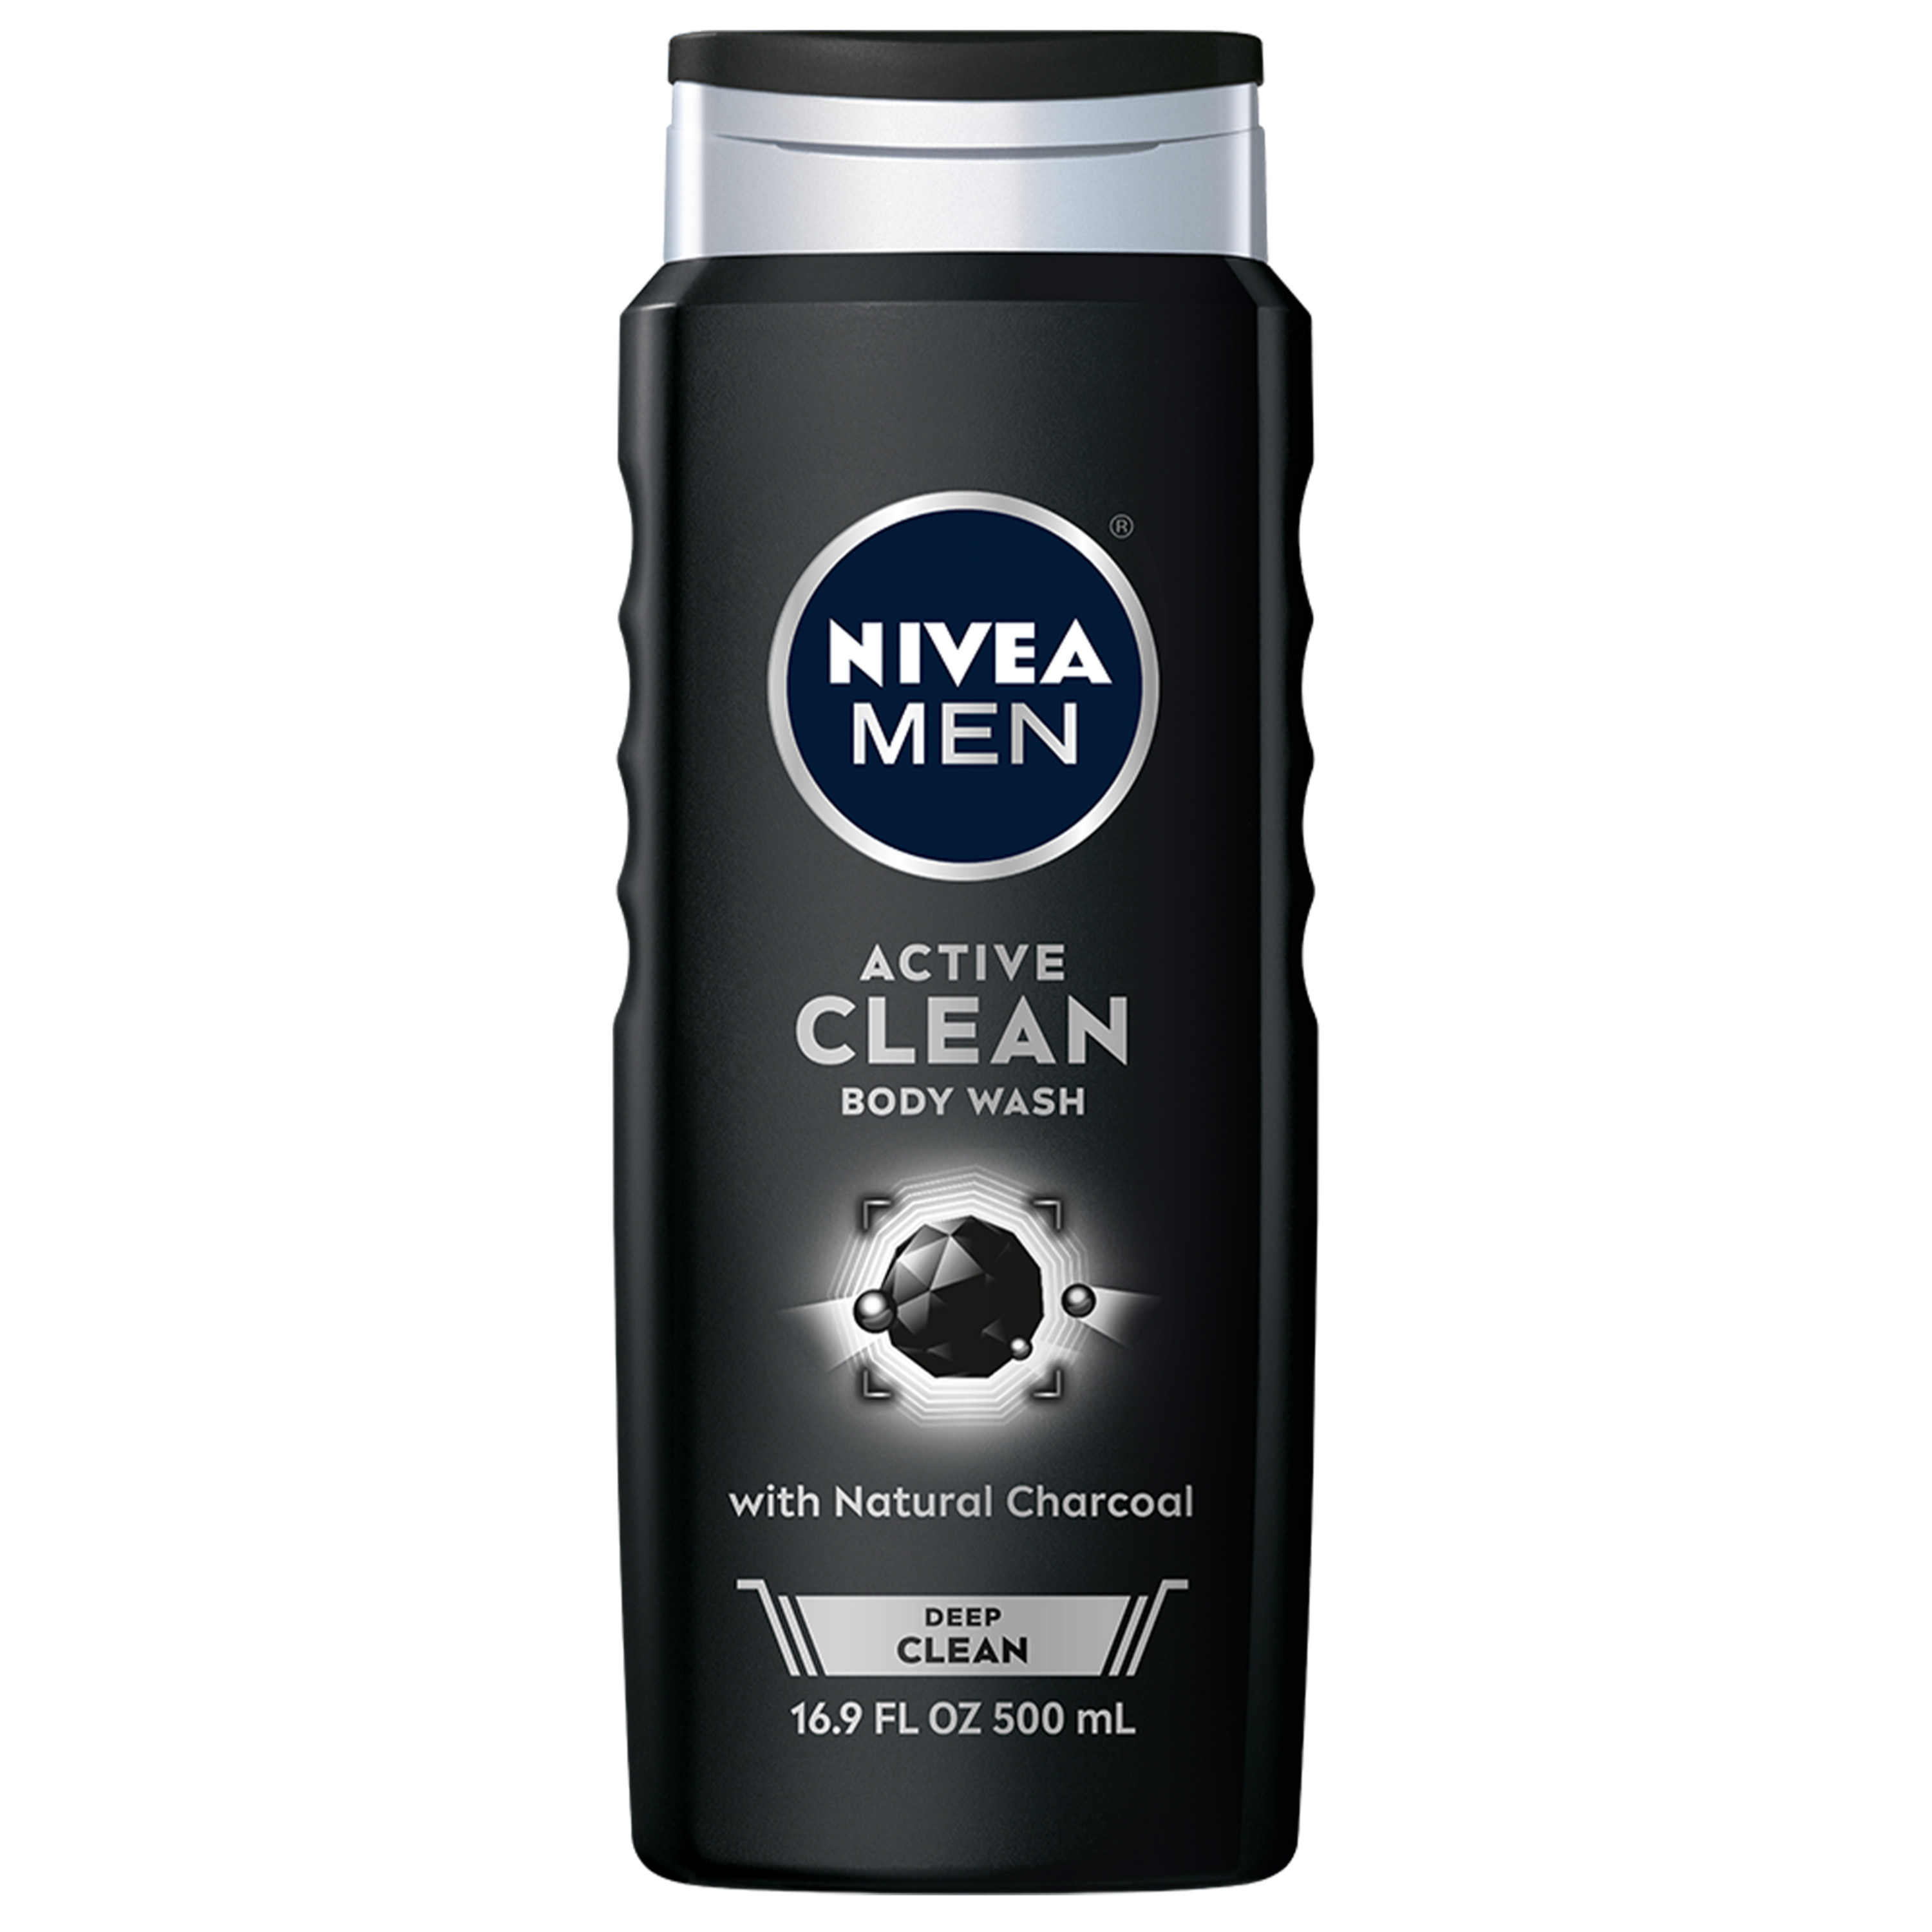 NIVEA MEN DEEP Active Clean Charcoal Body Wash, 16.9 Fl Oz Bottle - image 1 of 6